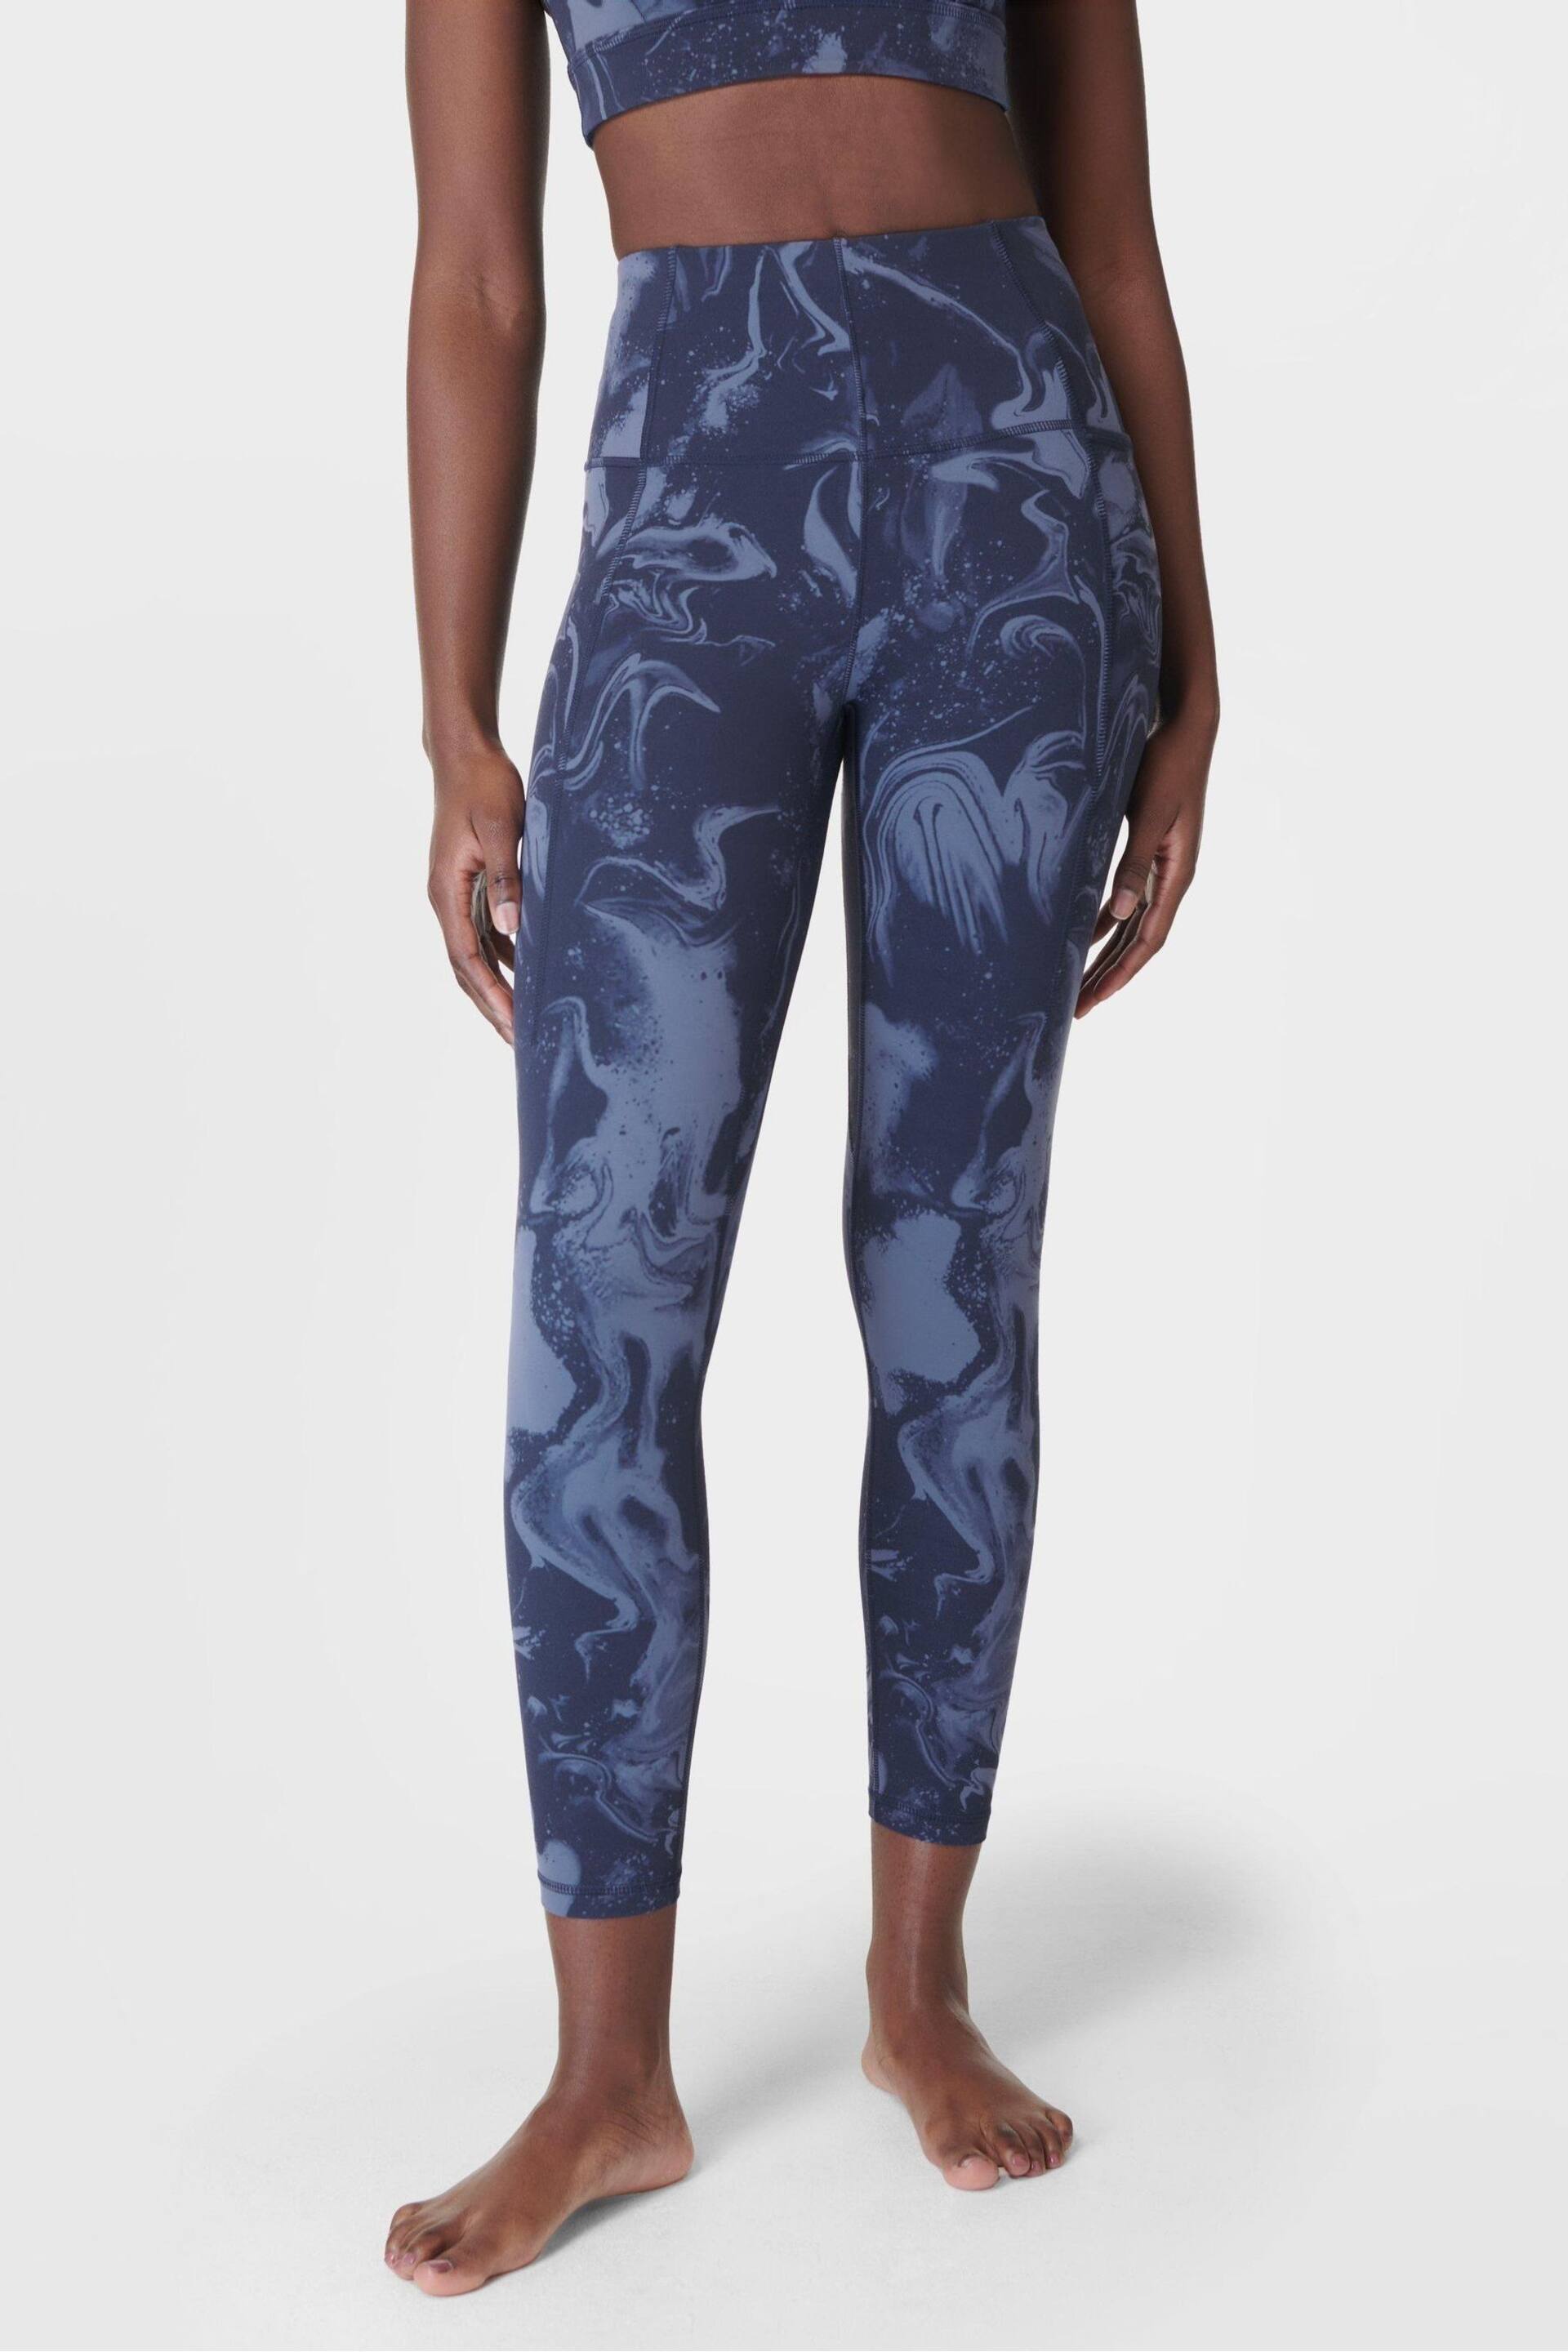 Sweaty Betty Blue Marble Speckle Print 7/8 Length Super Soft Yoga Leggings - Image 2 of 6